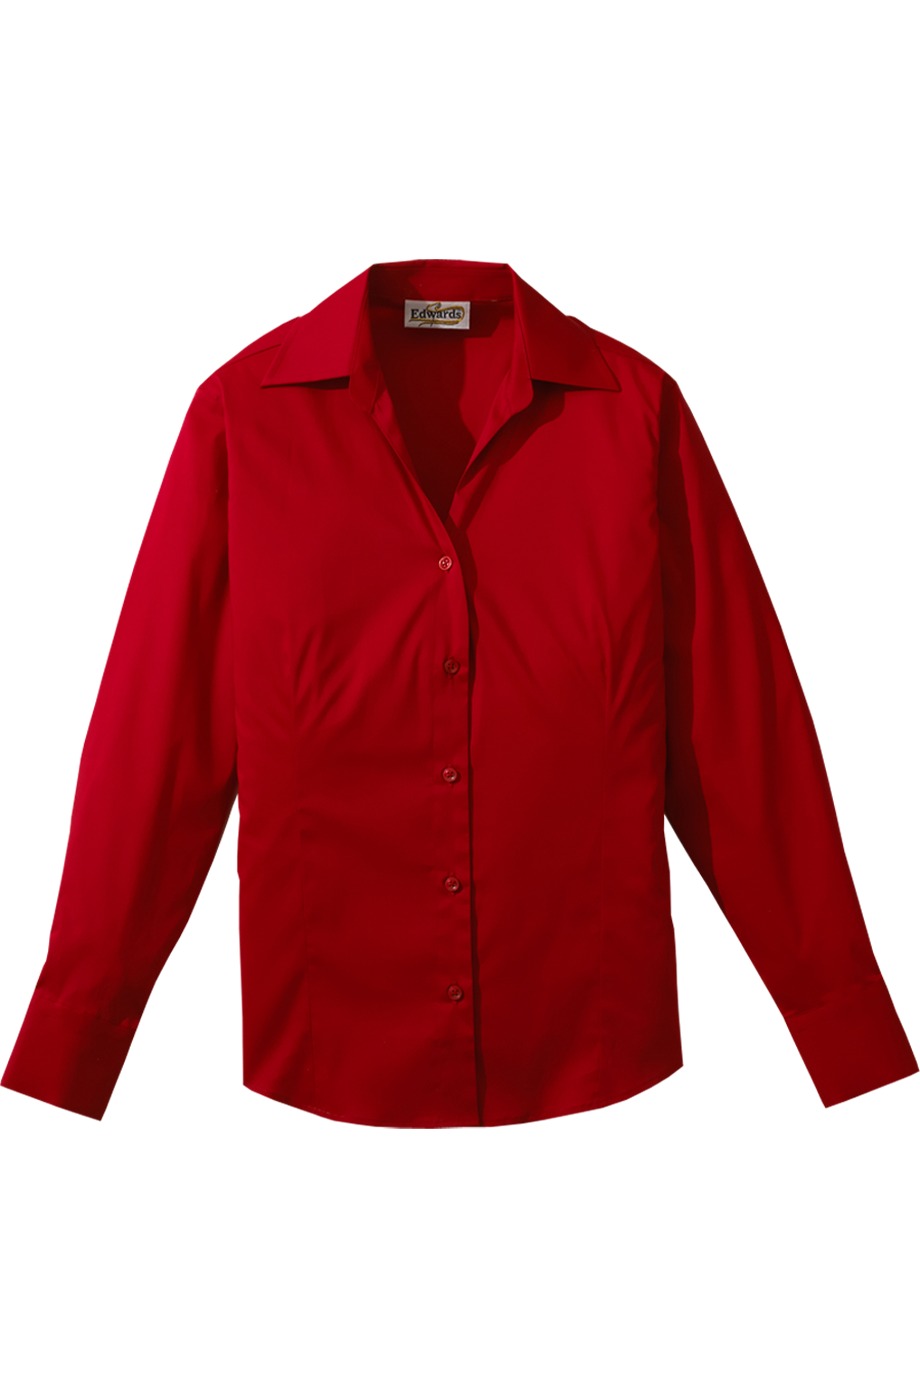 Edwards Garment 5034 - Women's Long Sleeve V-neck Tailored Stretch Blouse